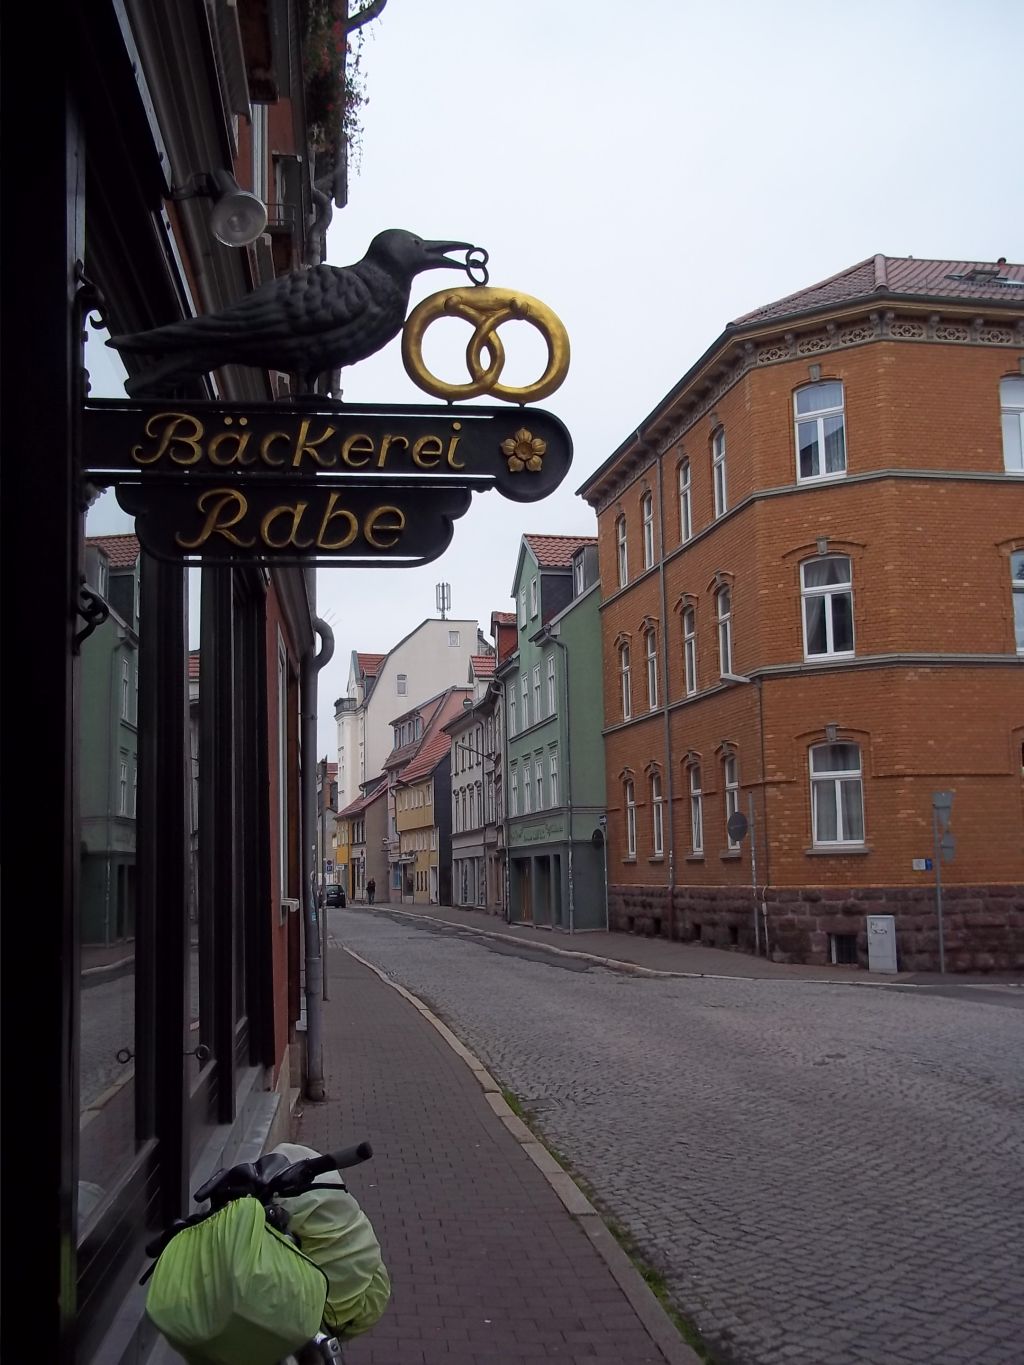 Eisenach Bakery Rabe, bicycle touring partner wanted